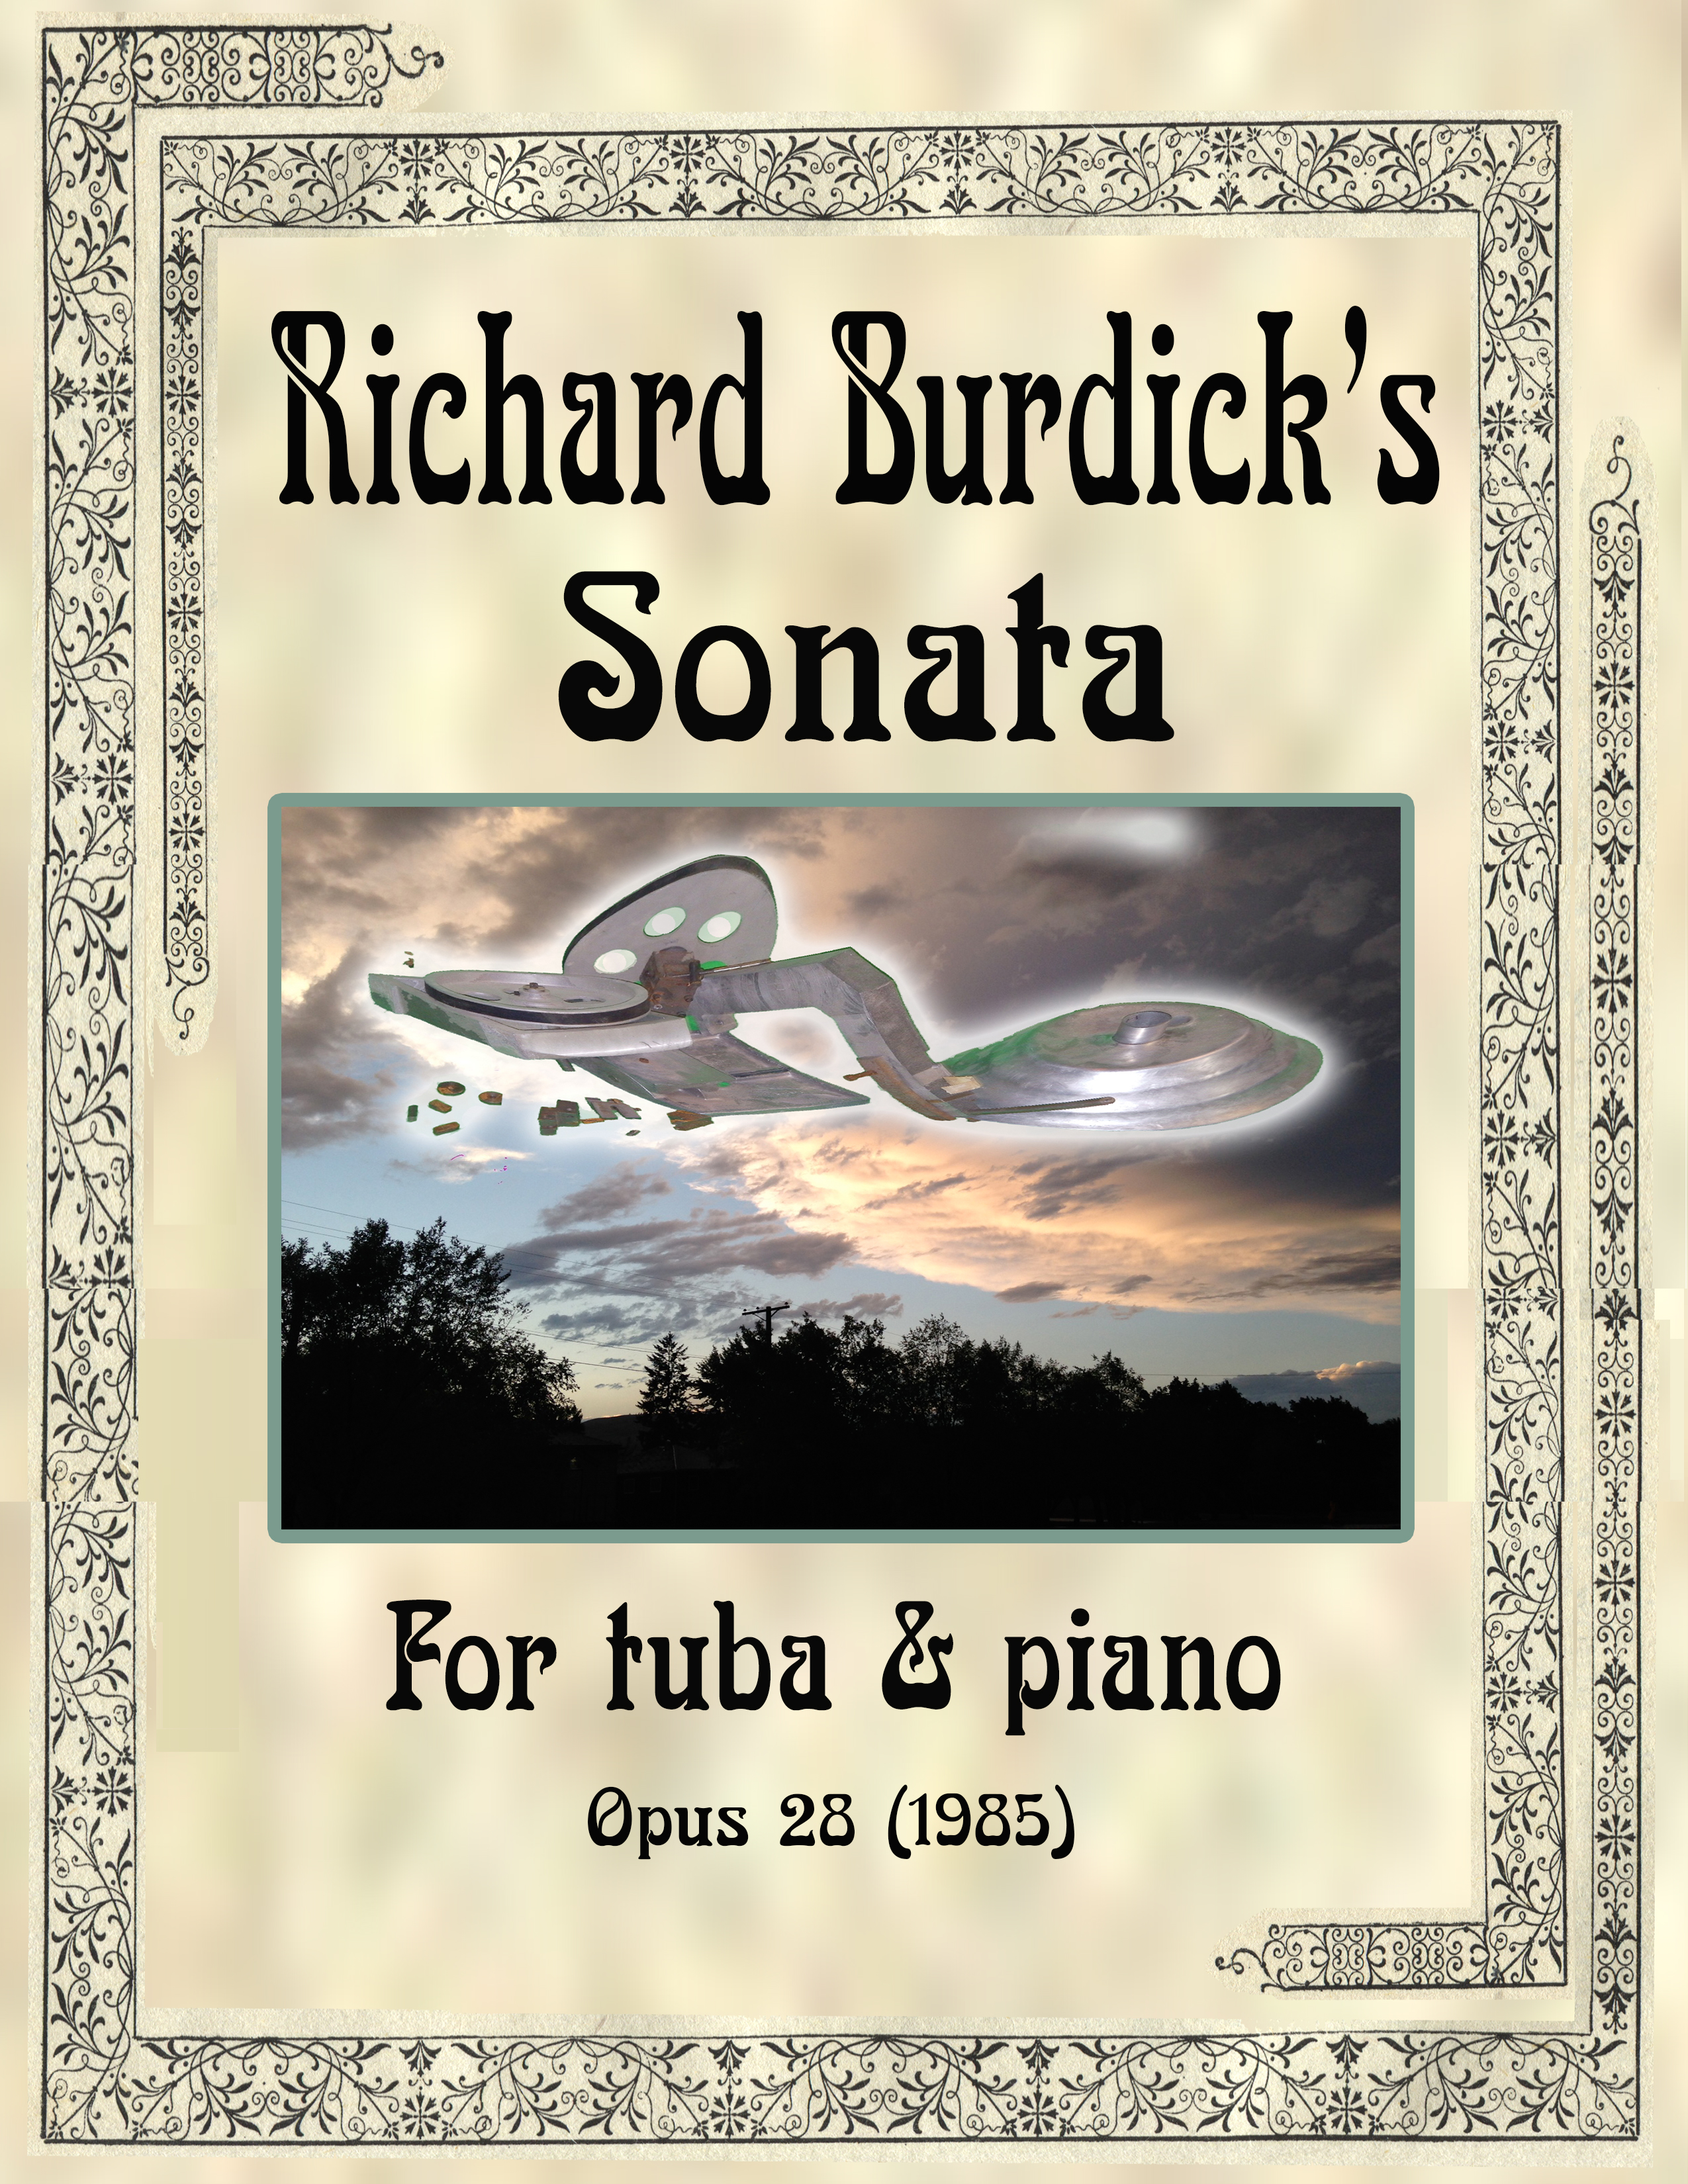 Burdick: Tuba Sonata sheet music cover